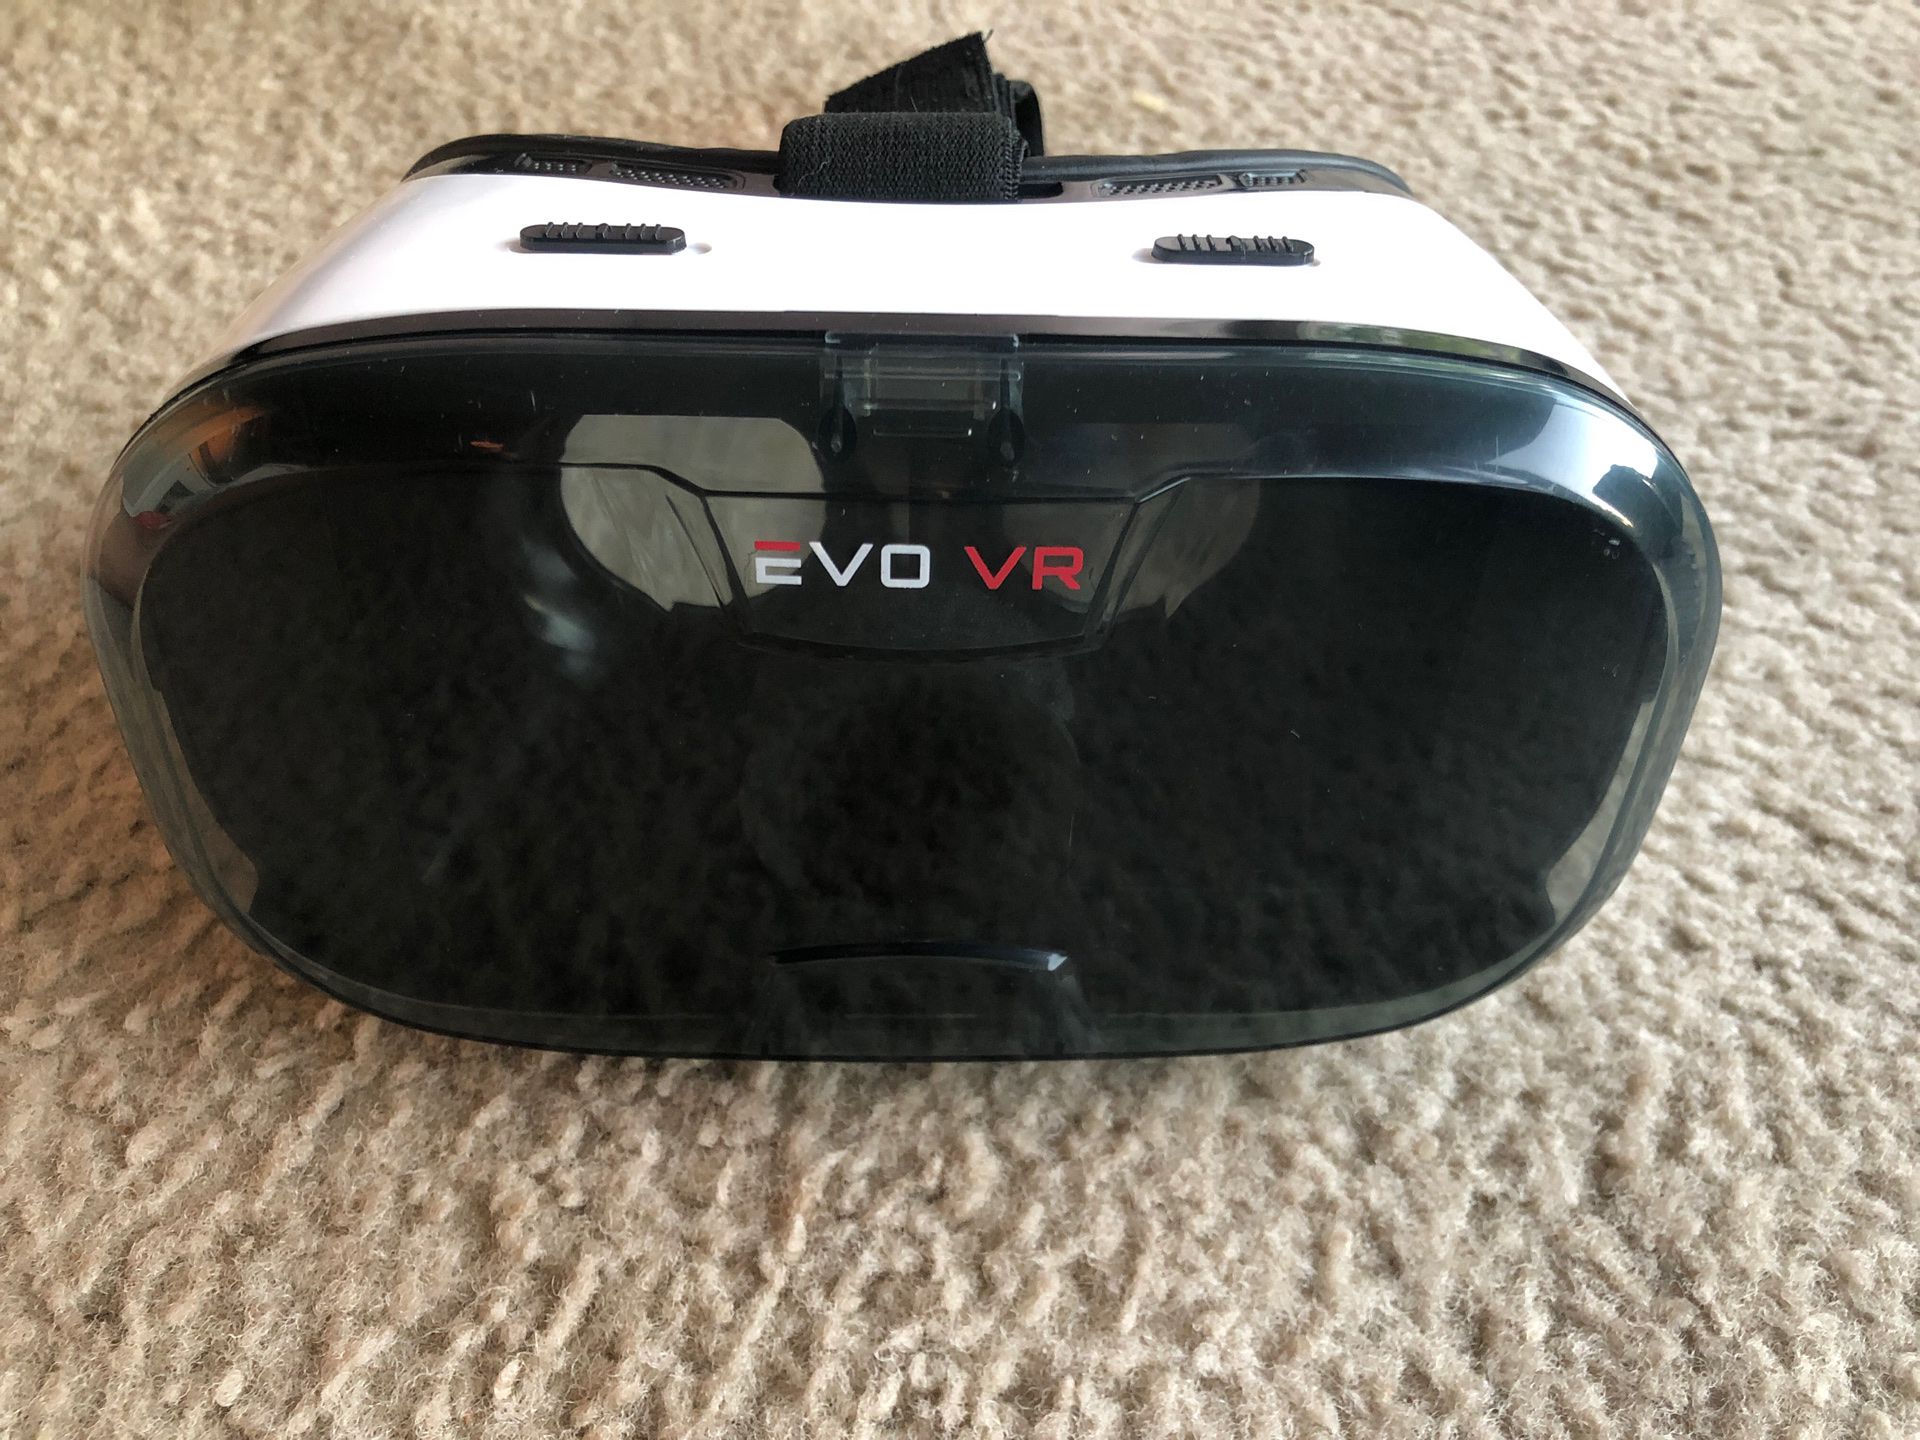 EVO VR headset